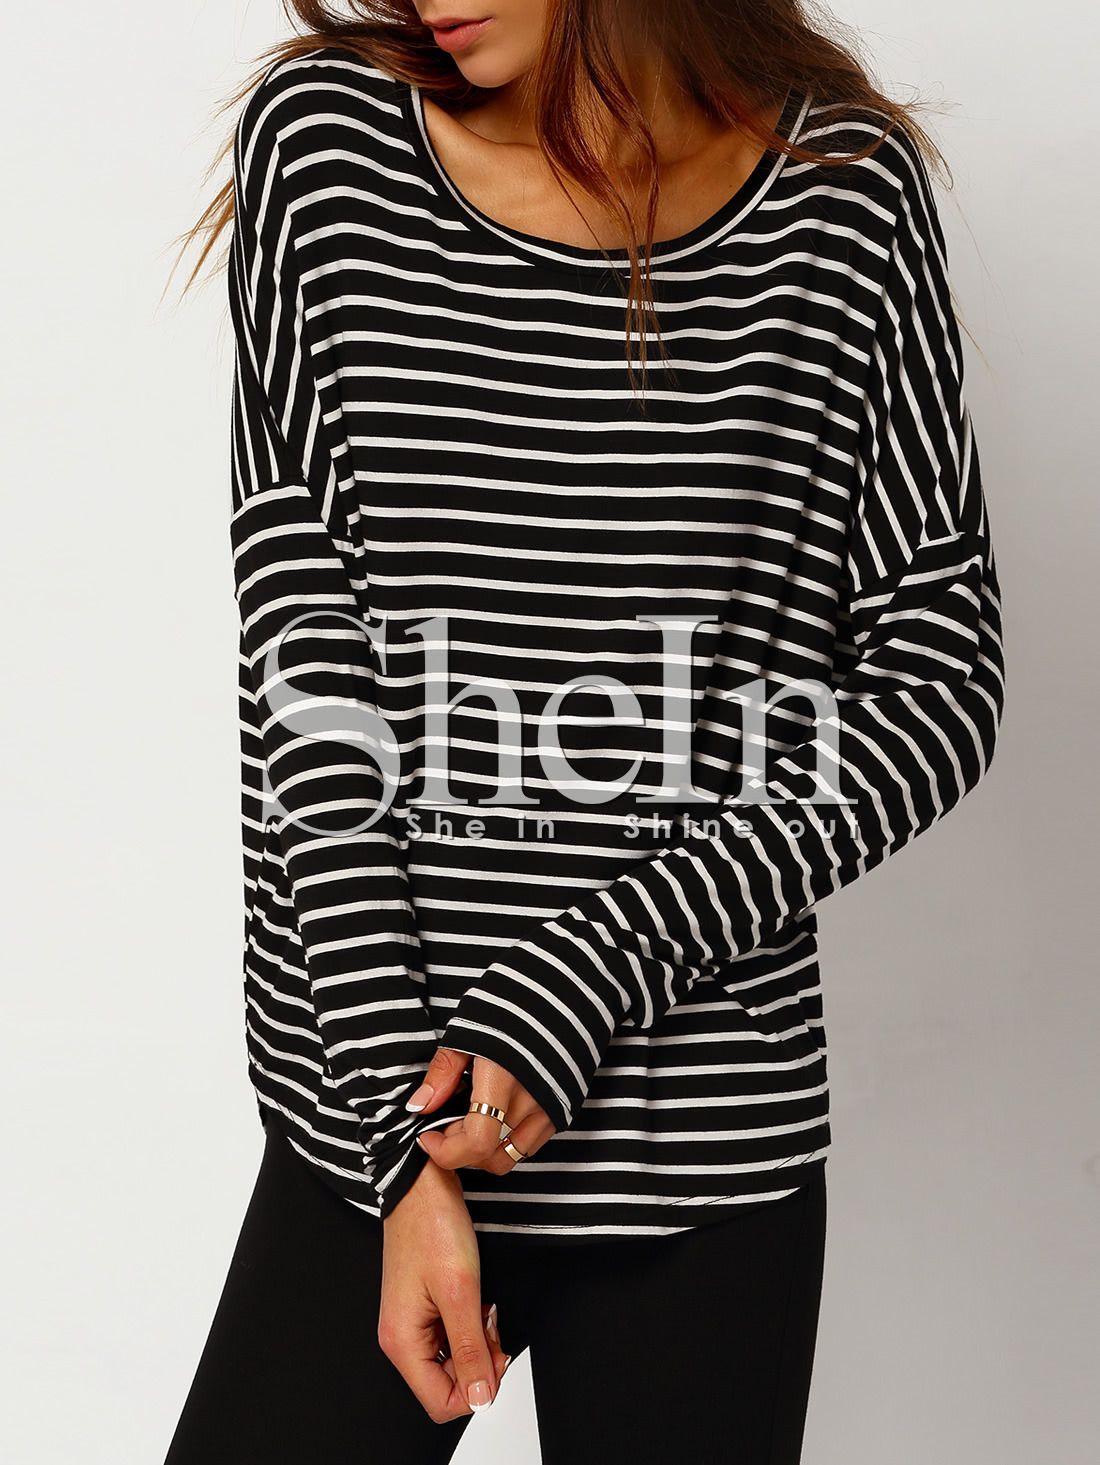 Black White Striped Round Neck T-Shirt | SHEIN